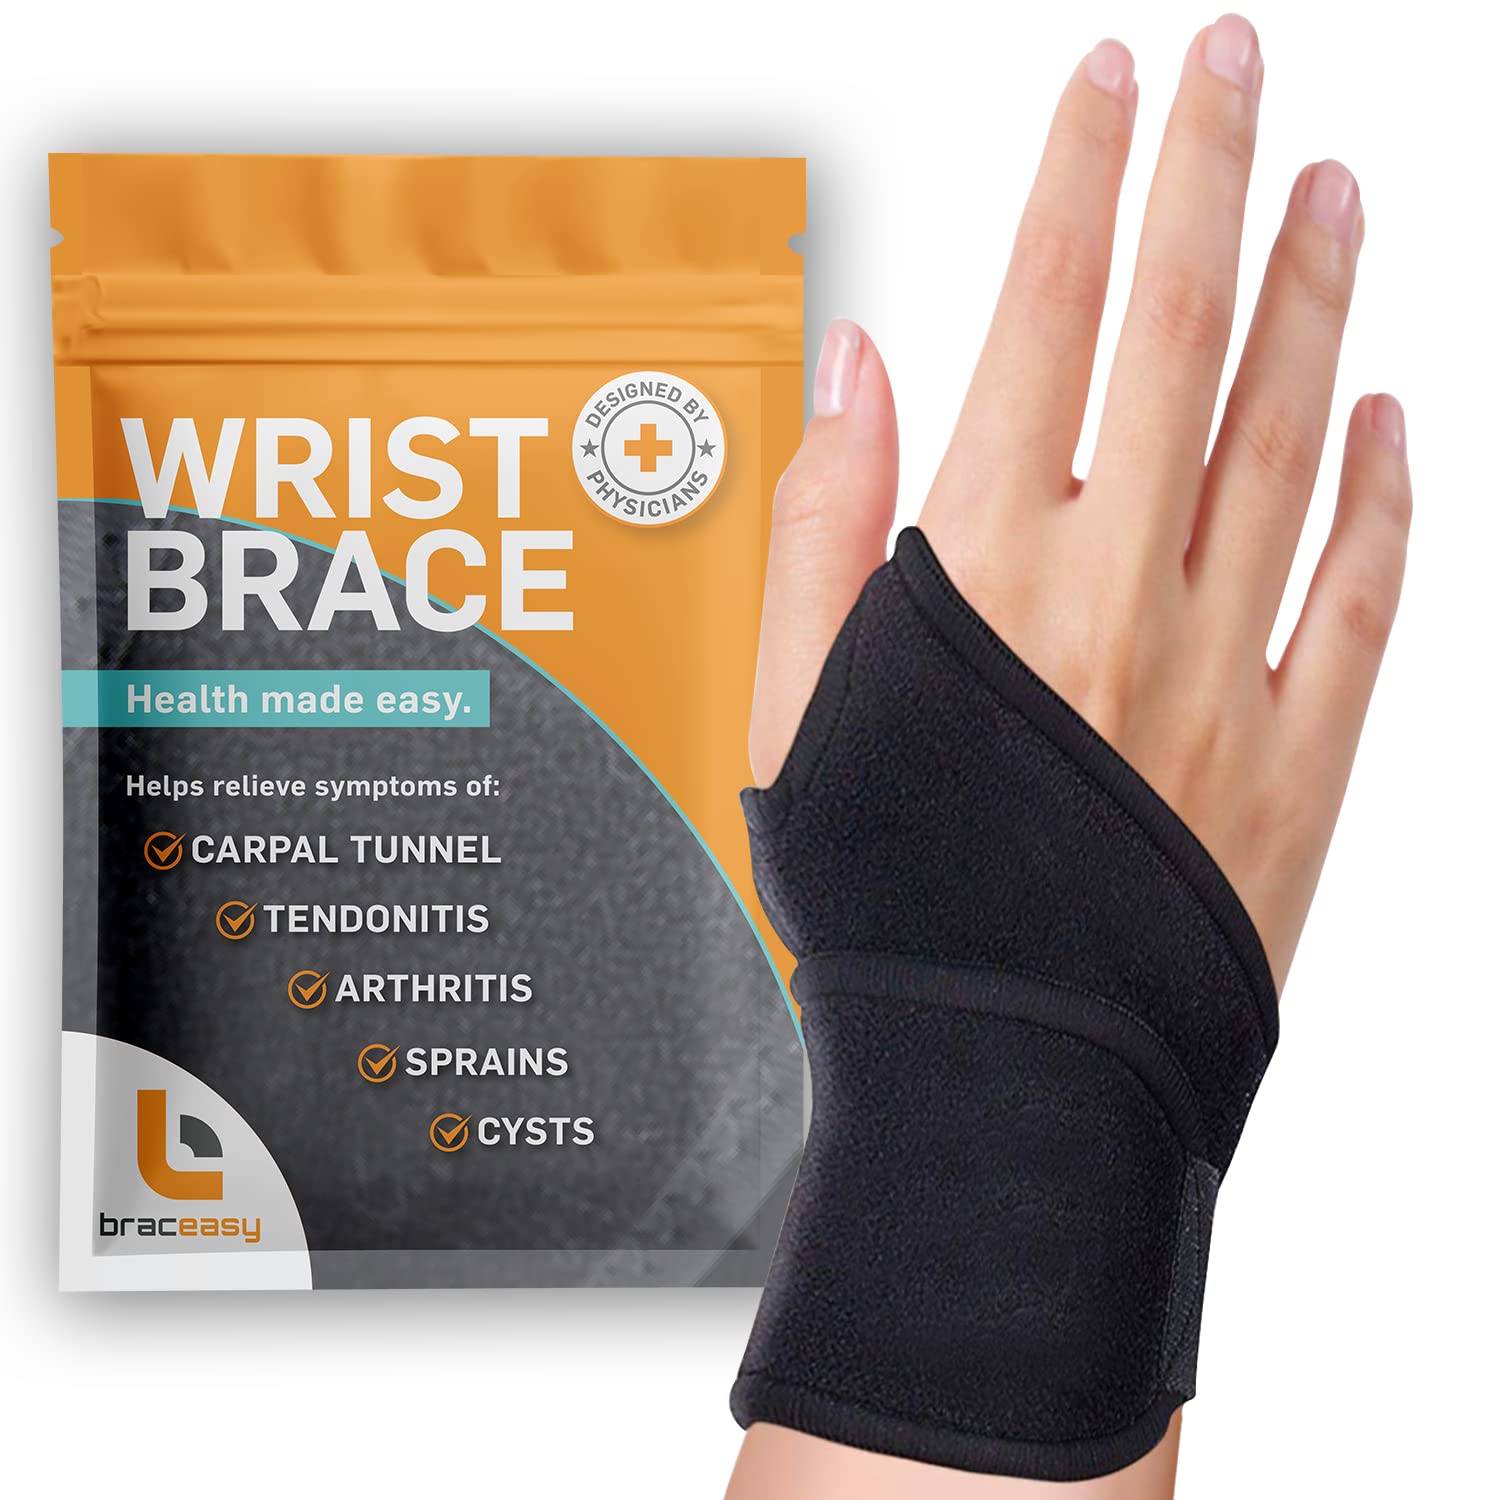 BracEasy Wrist Brace Review